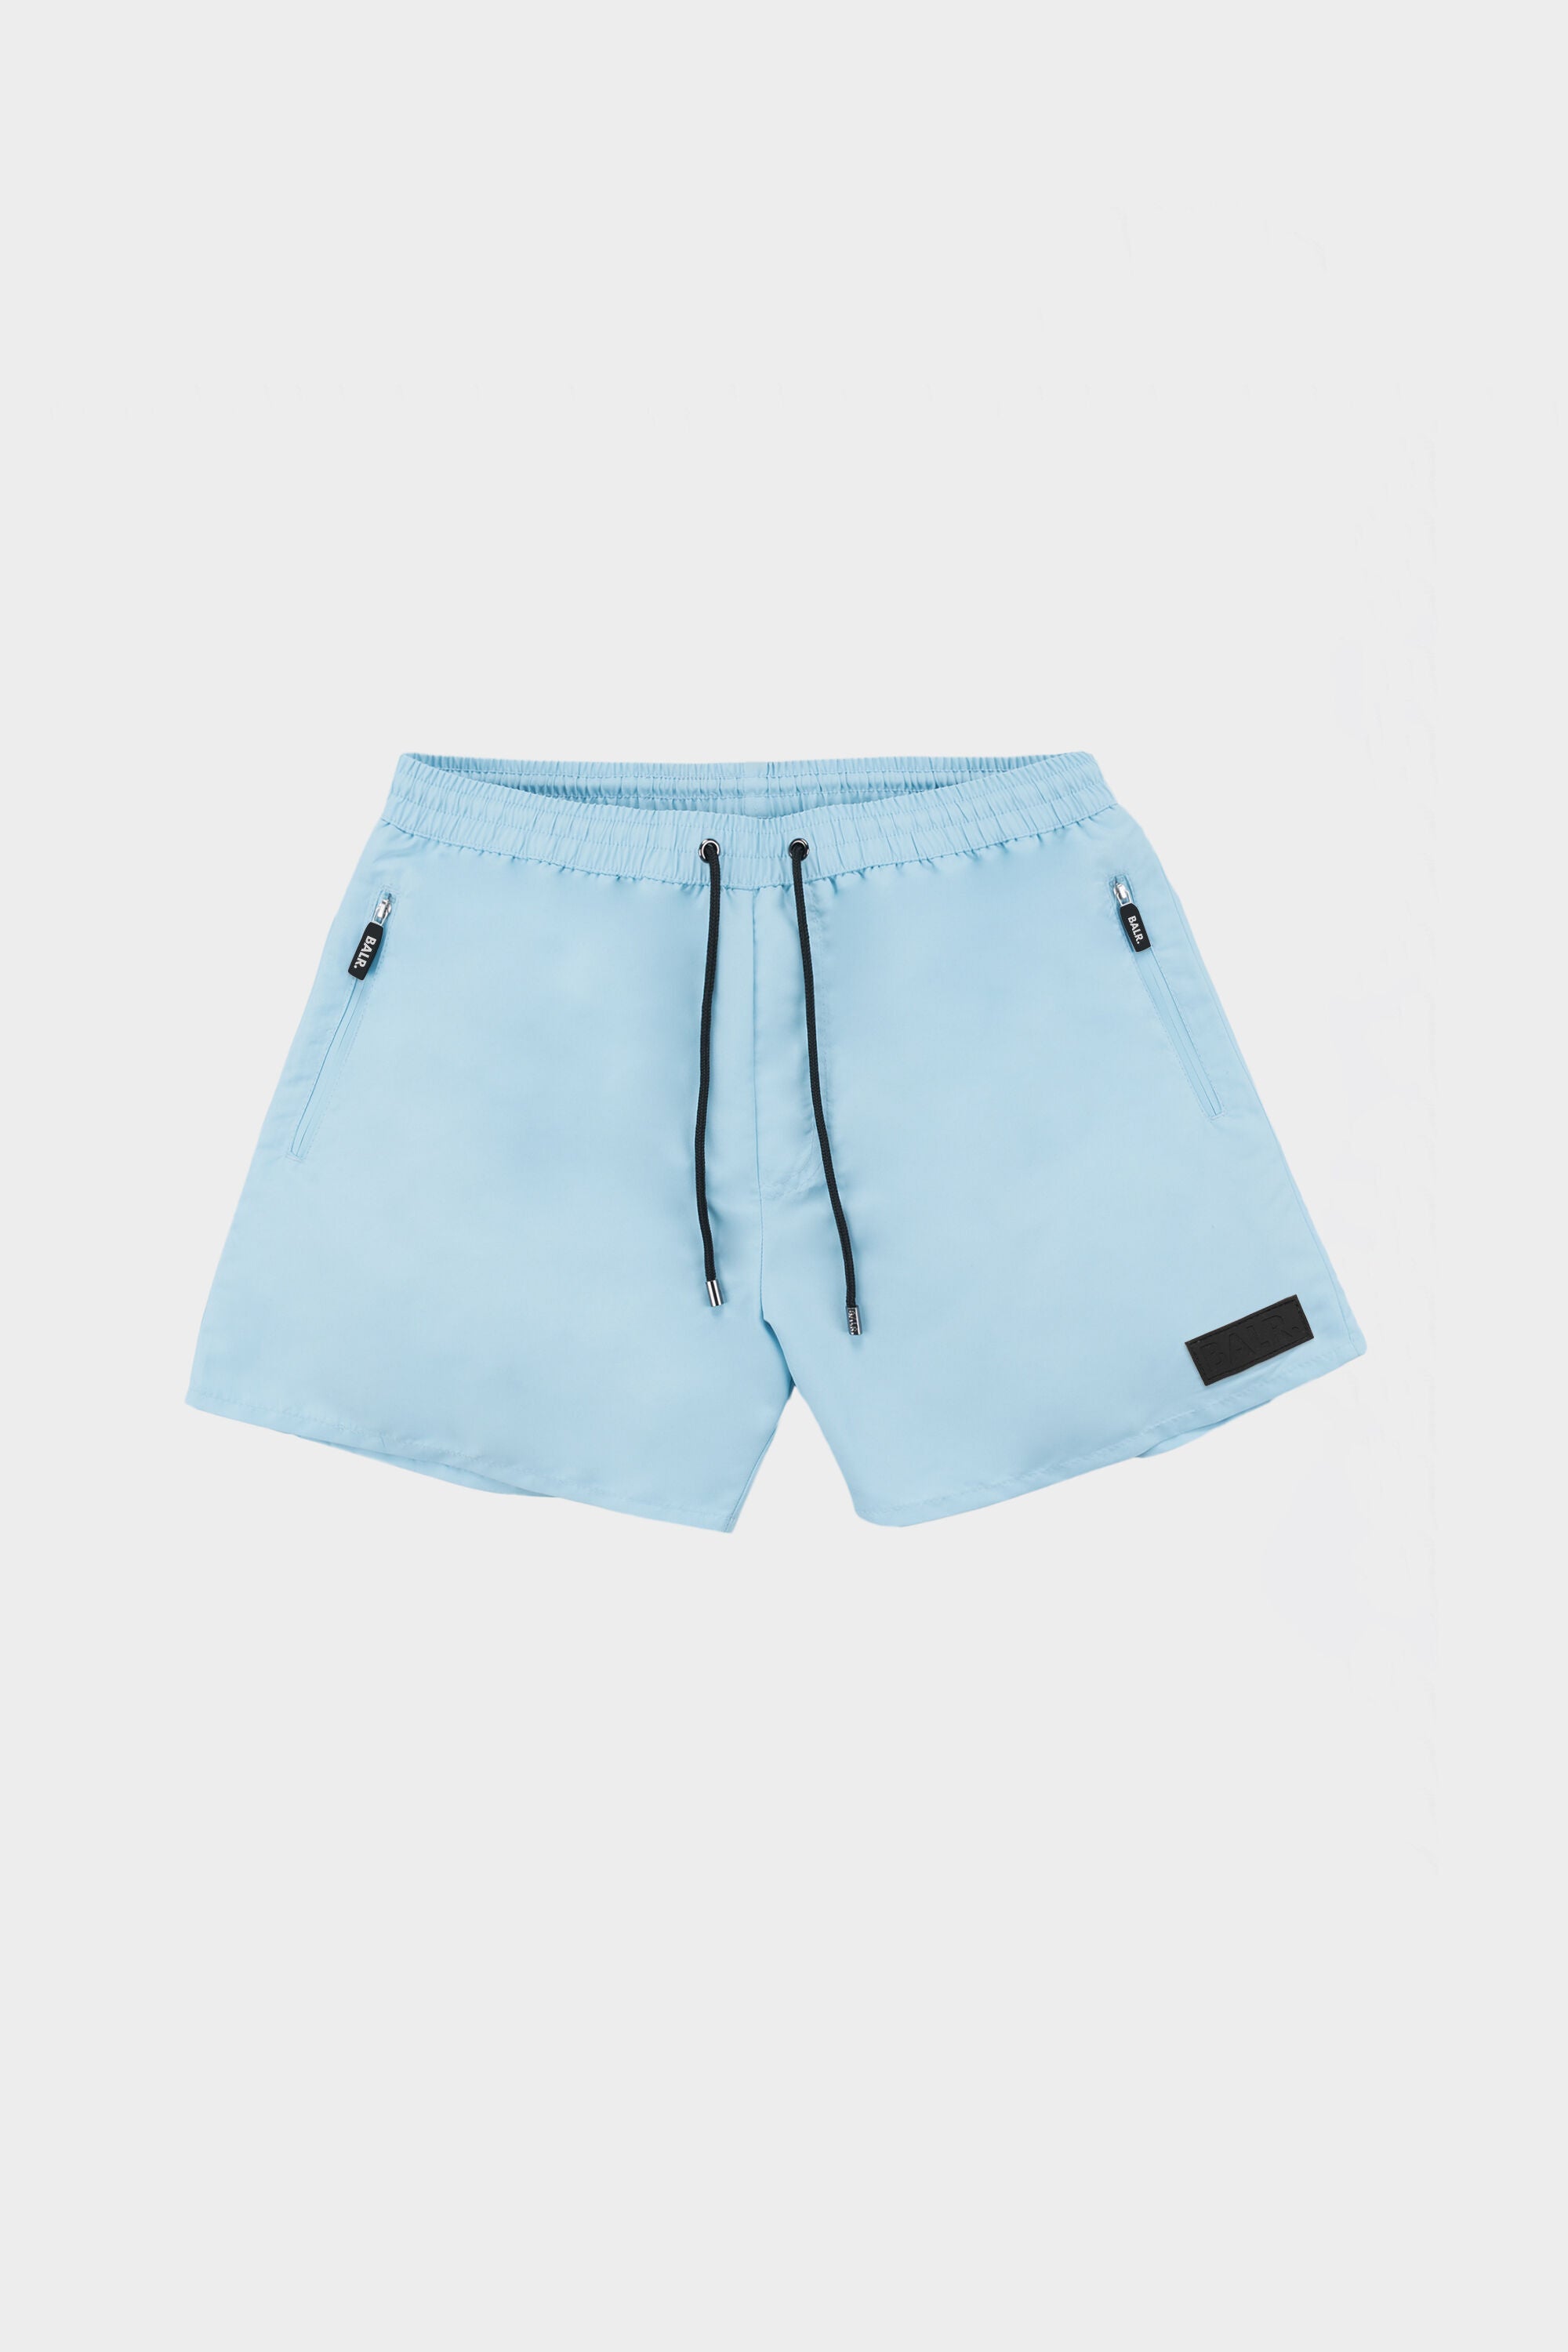 Blue Luxury Brand Shorts